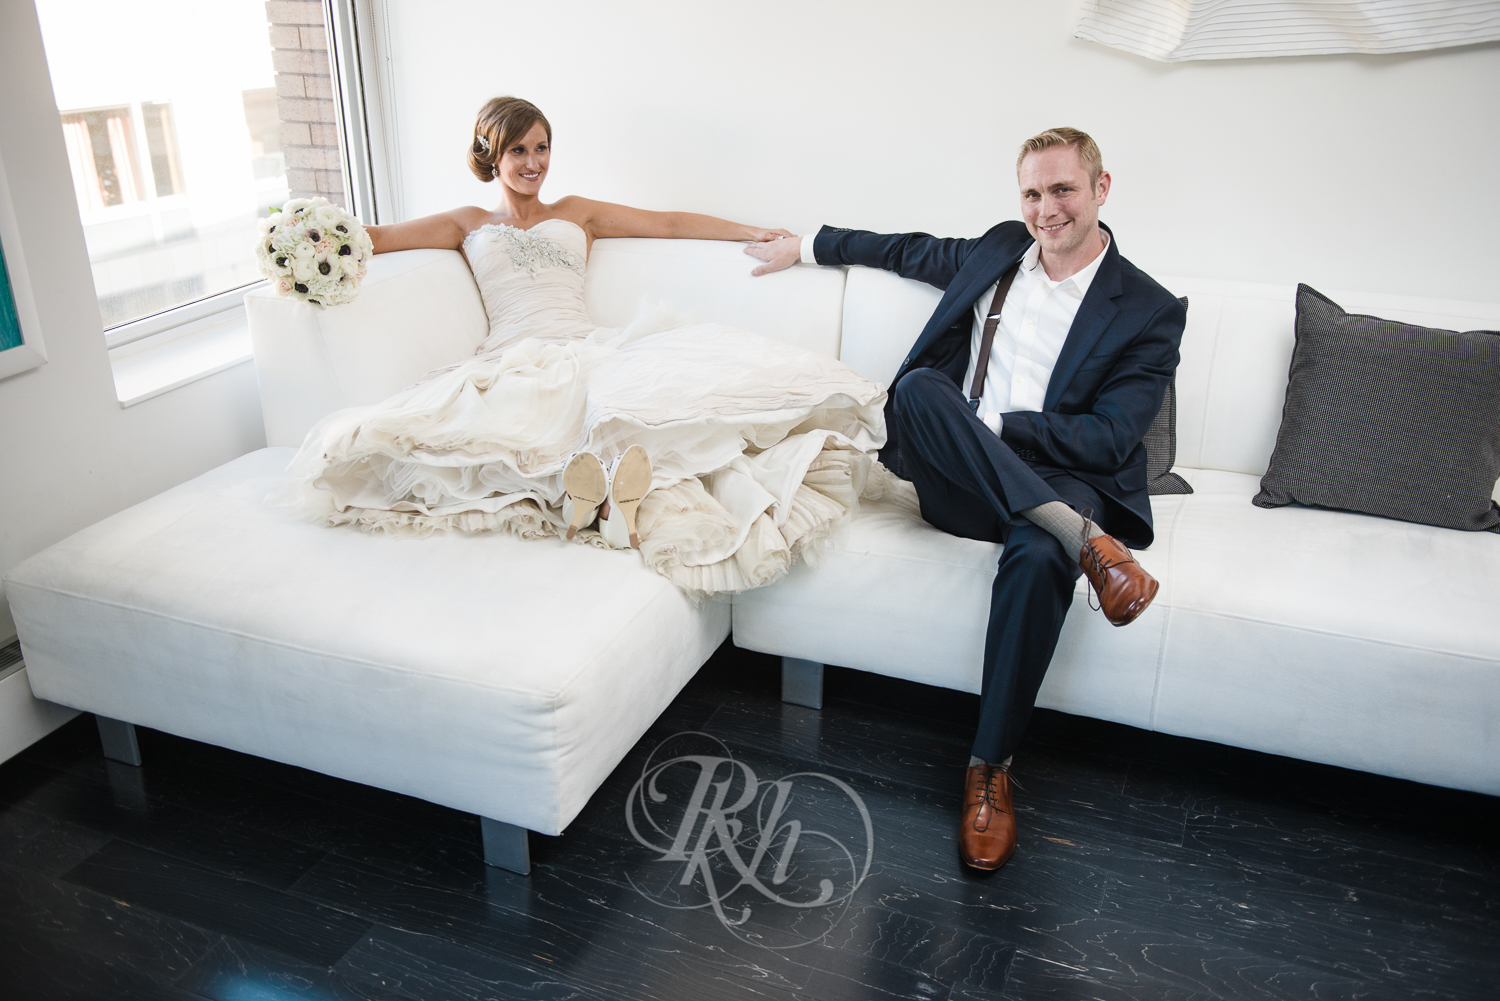  Minneapolis Wedding Photography - Becca & Justin - RKH Images-22 